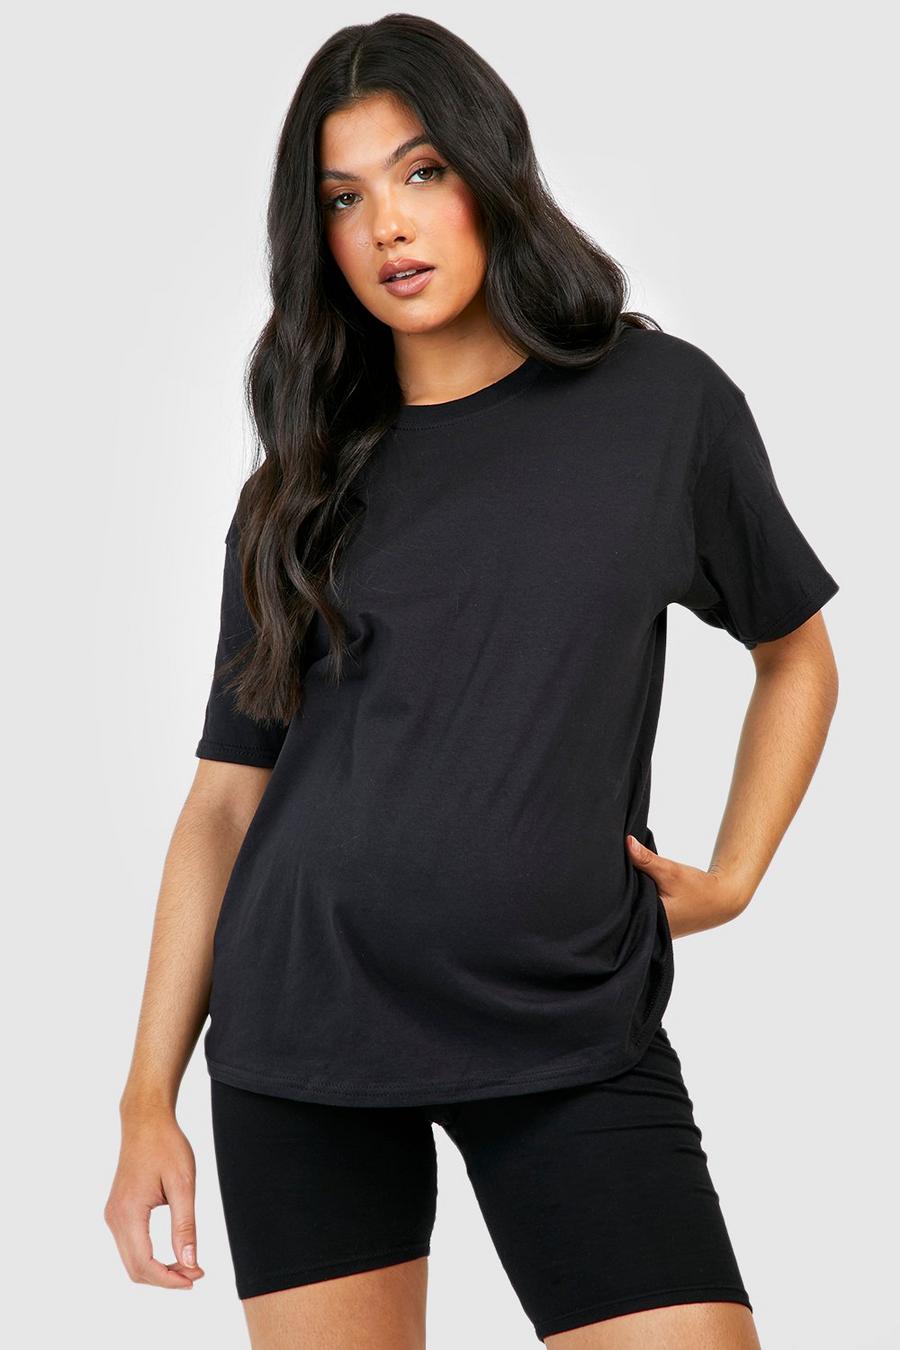 Black Maternity Cotton T-Shirt